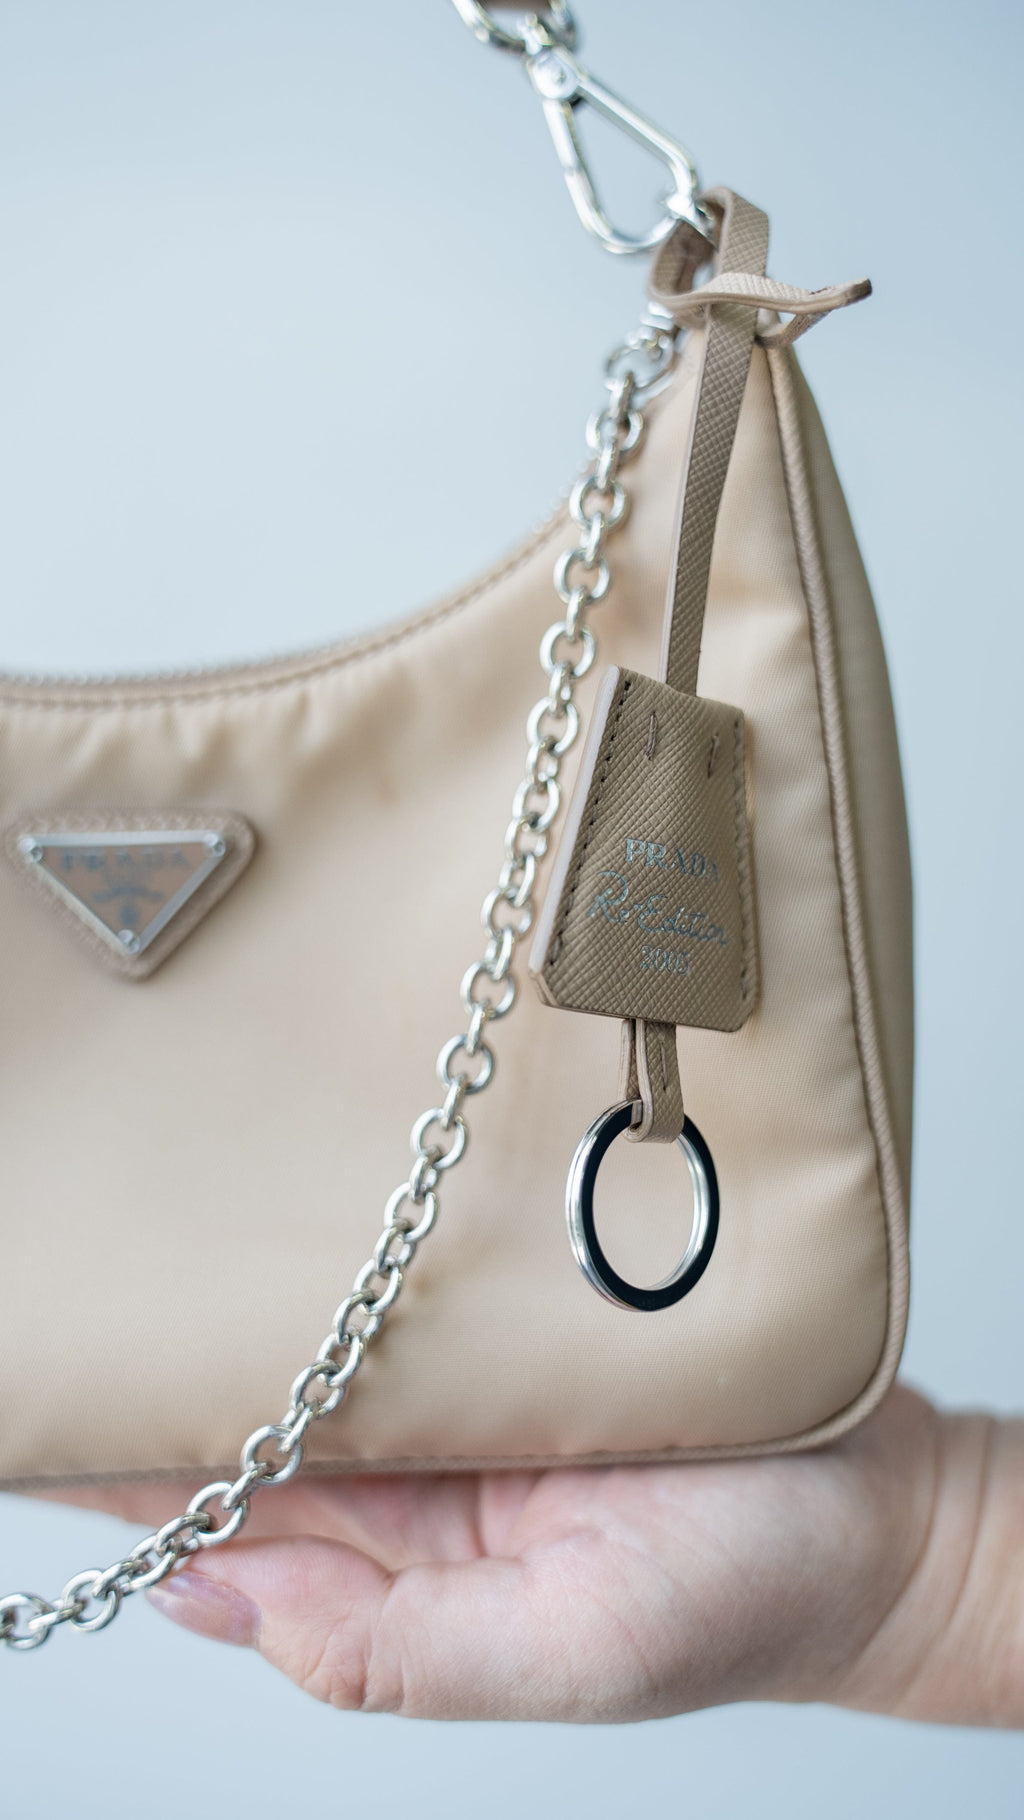 Re-edition leather handbag Prada Beige in Leather - 35382409